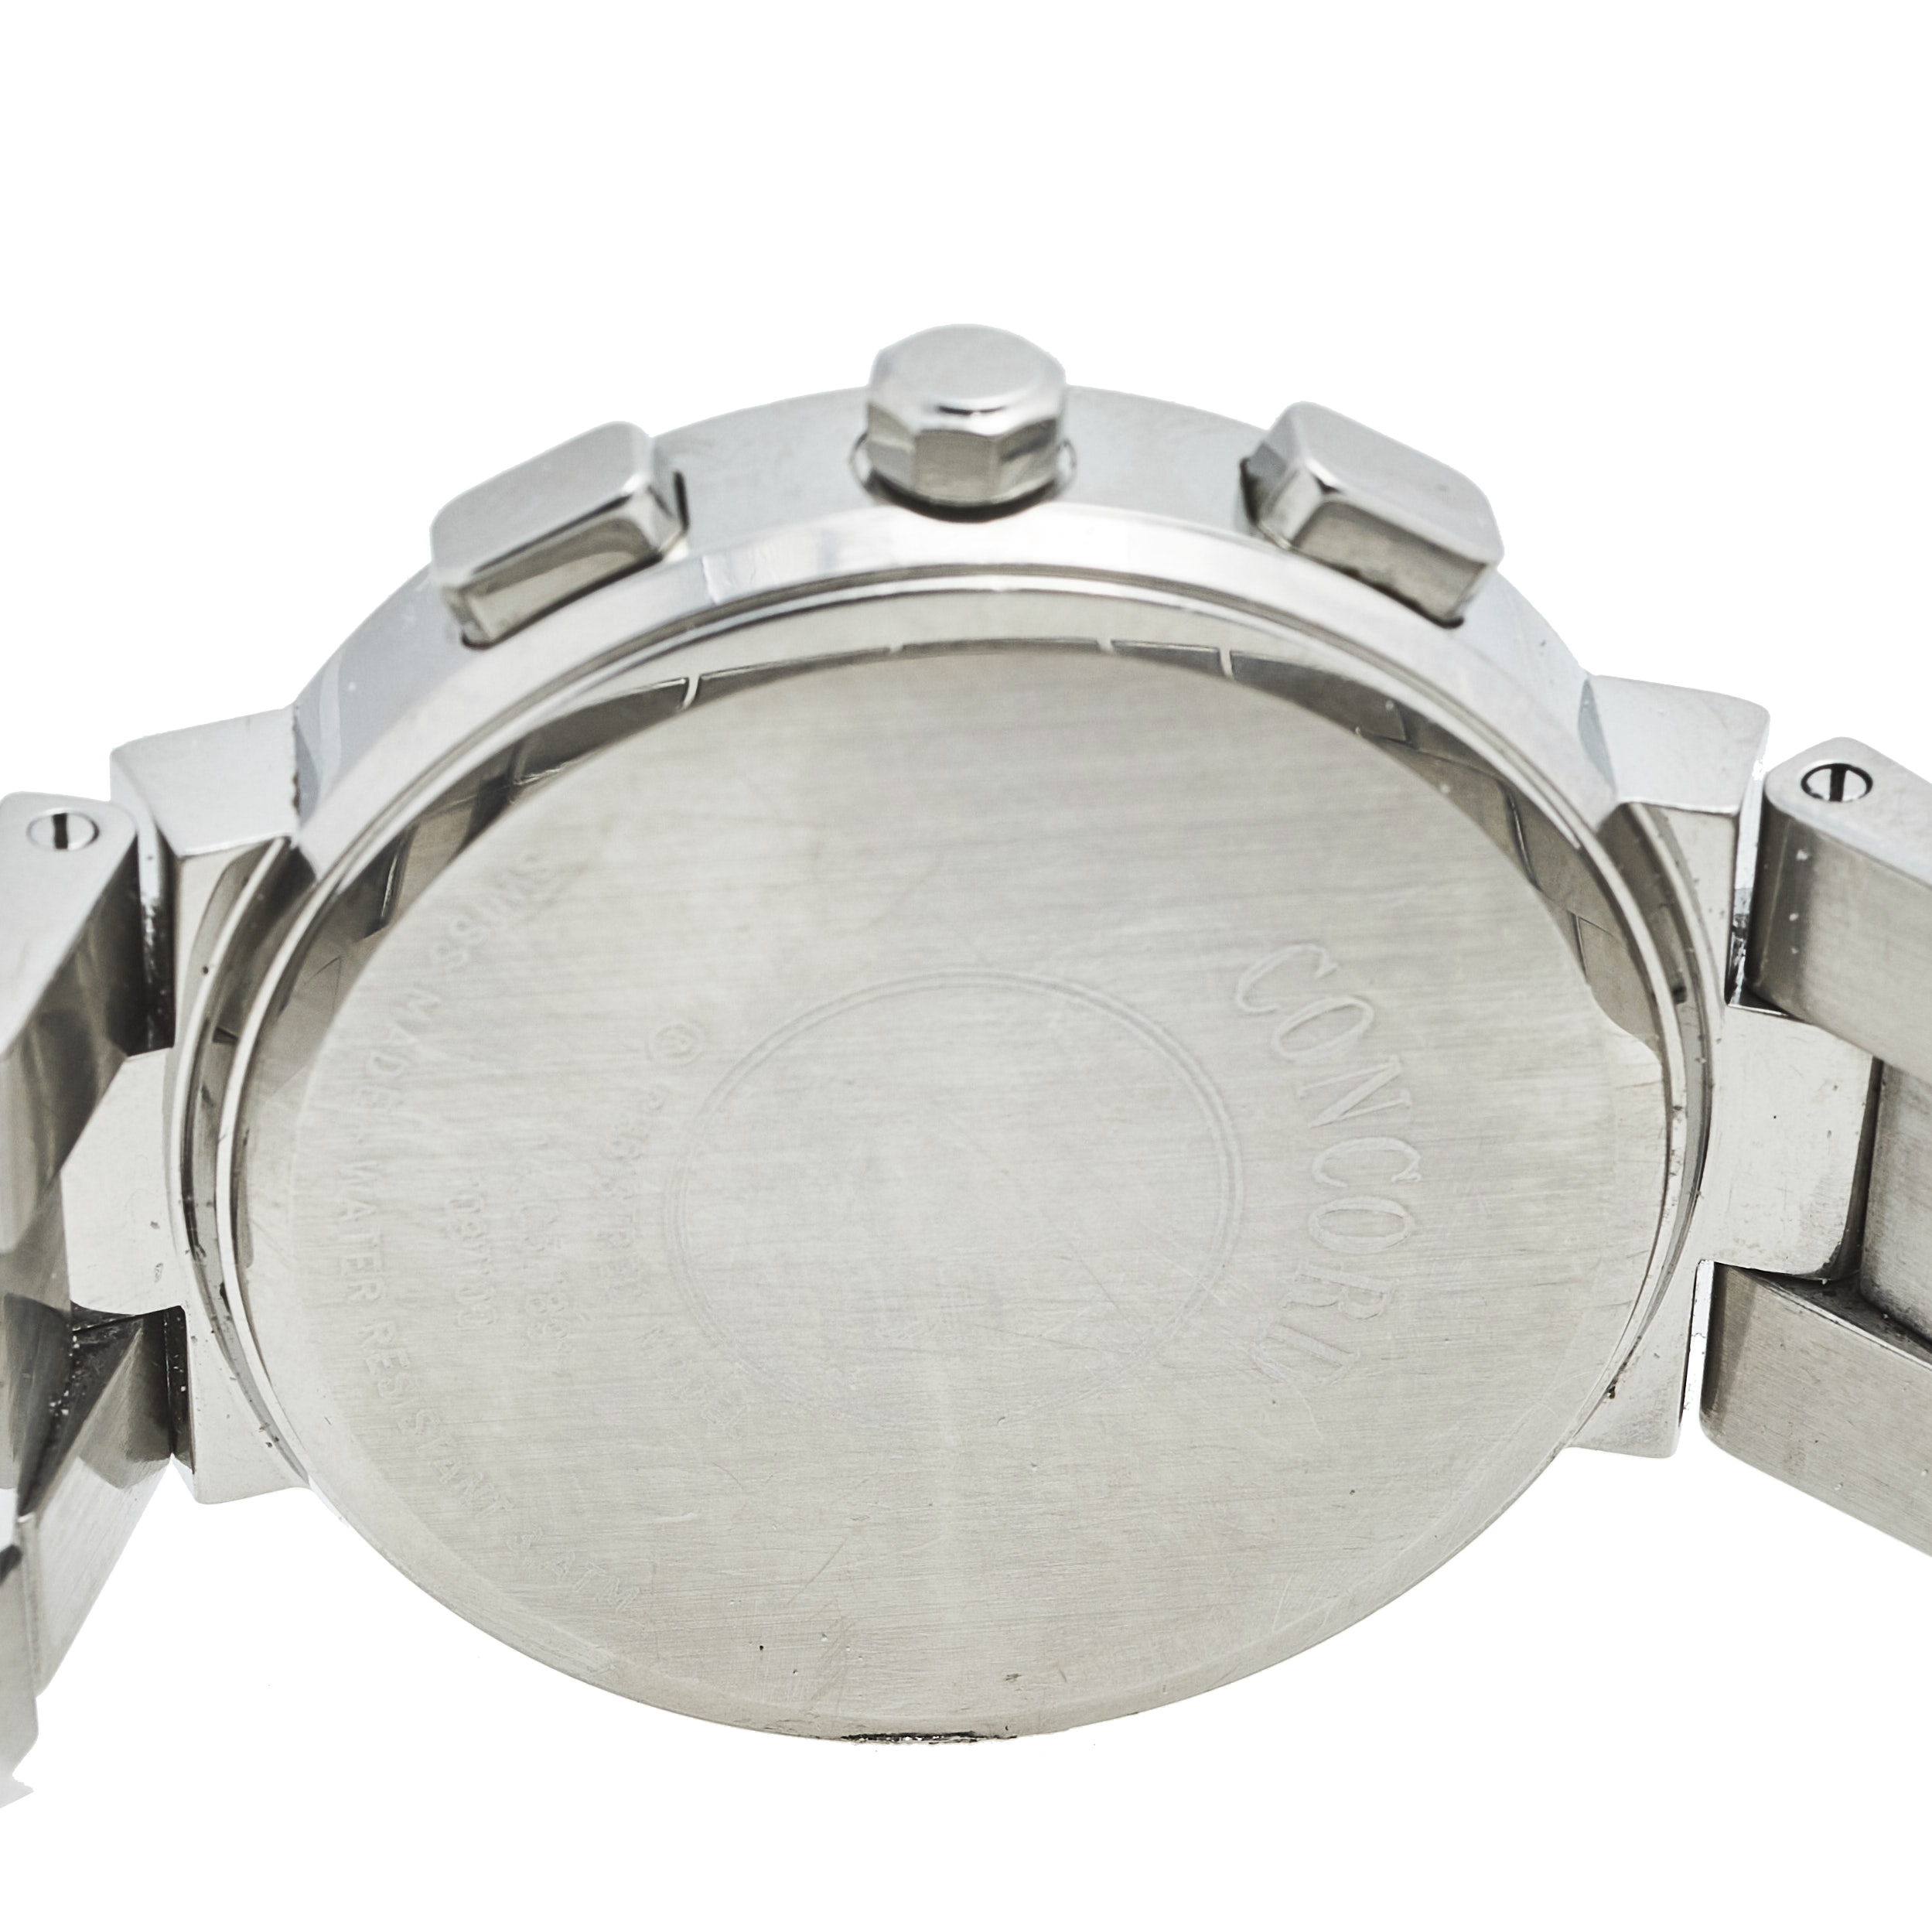 Concord Silver Stainless Steel La Scala 14.C5.1891 Men's Wristwatch 38 Mm